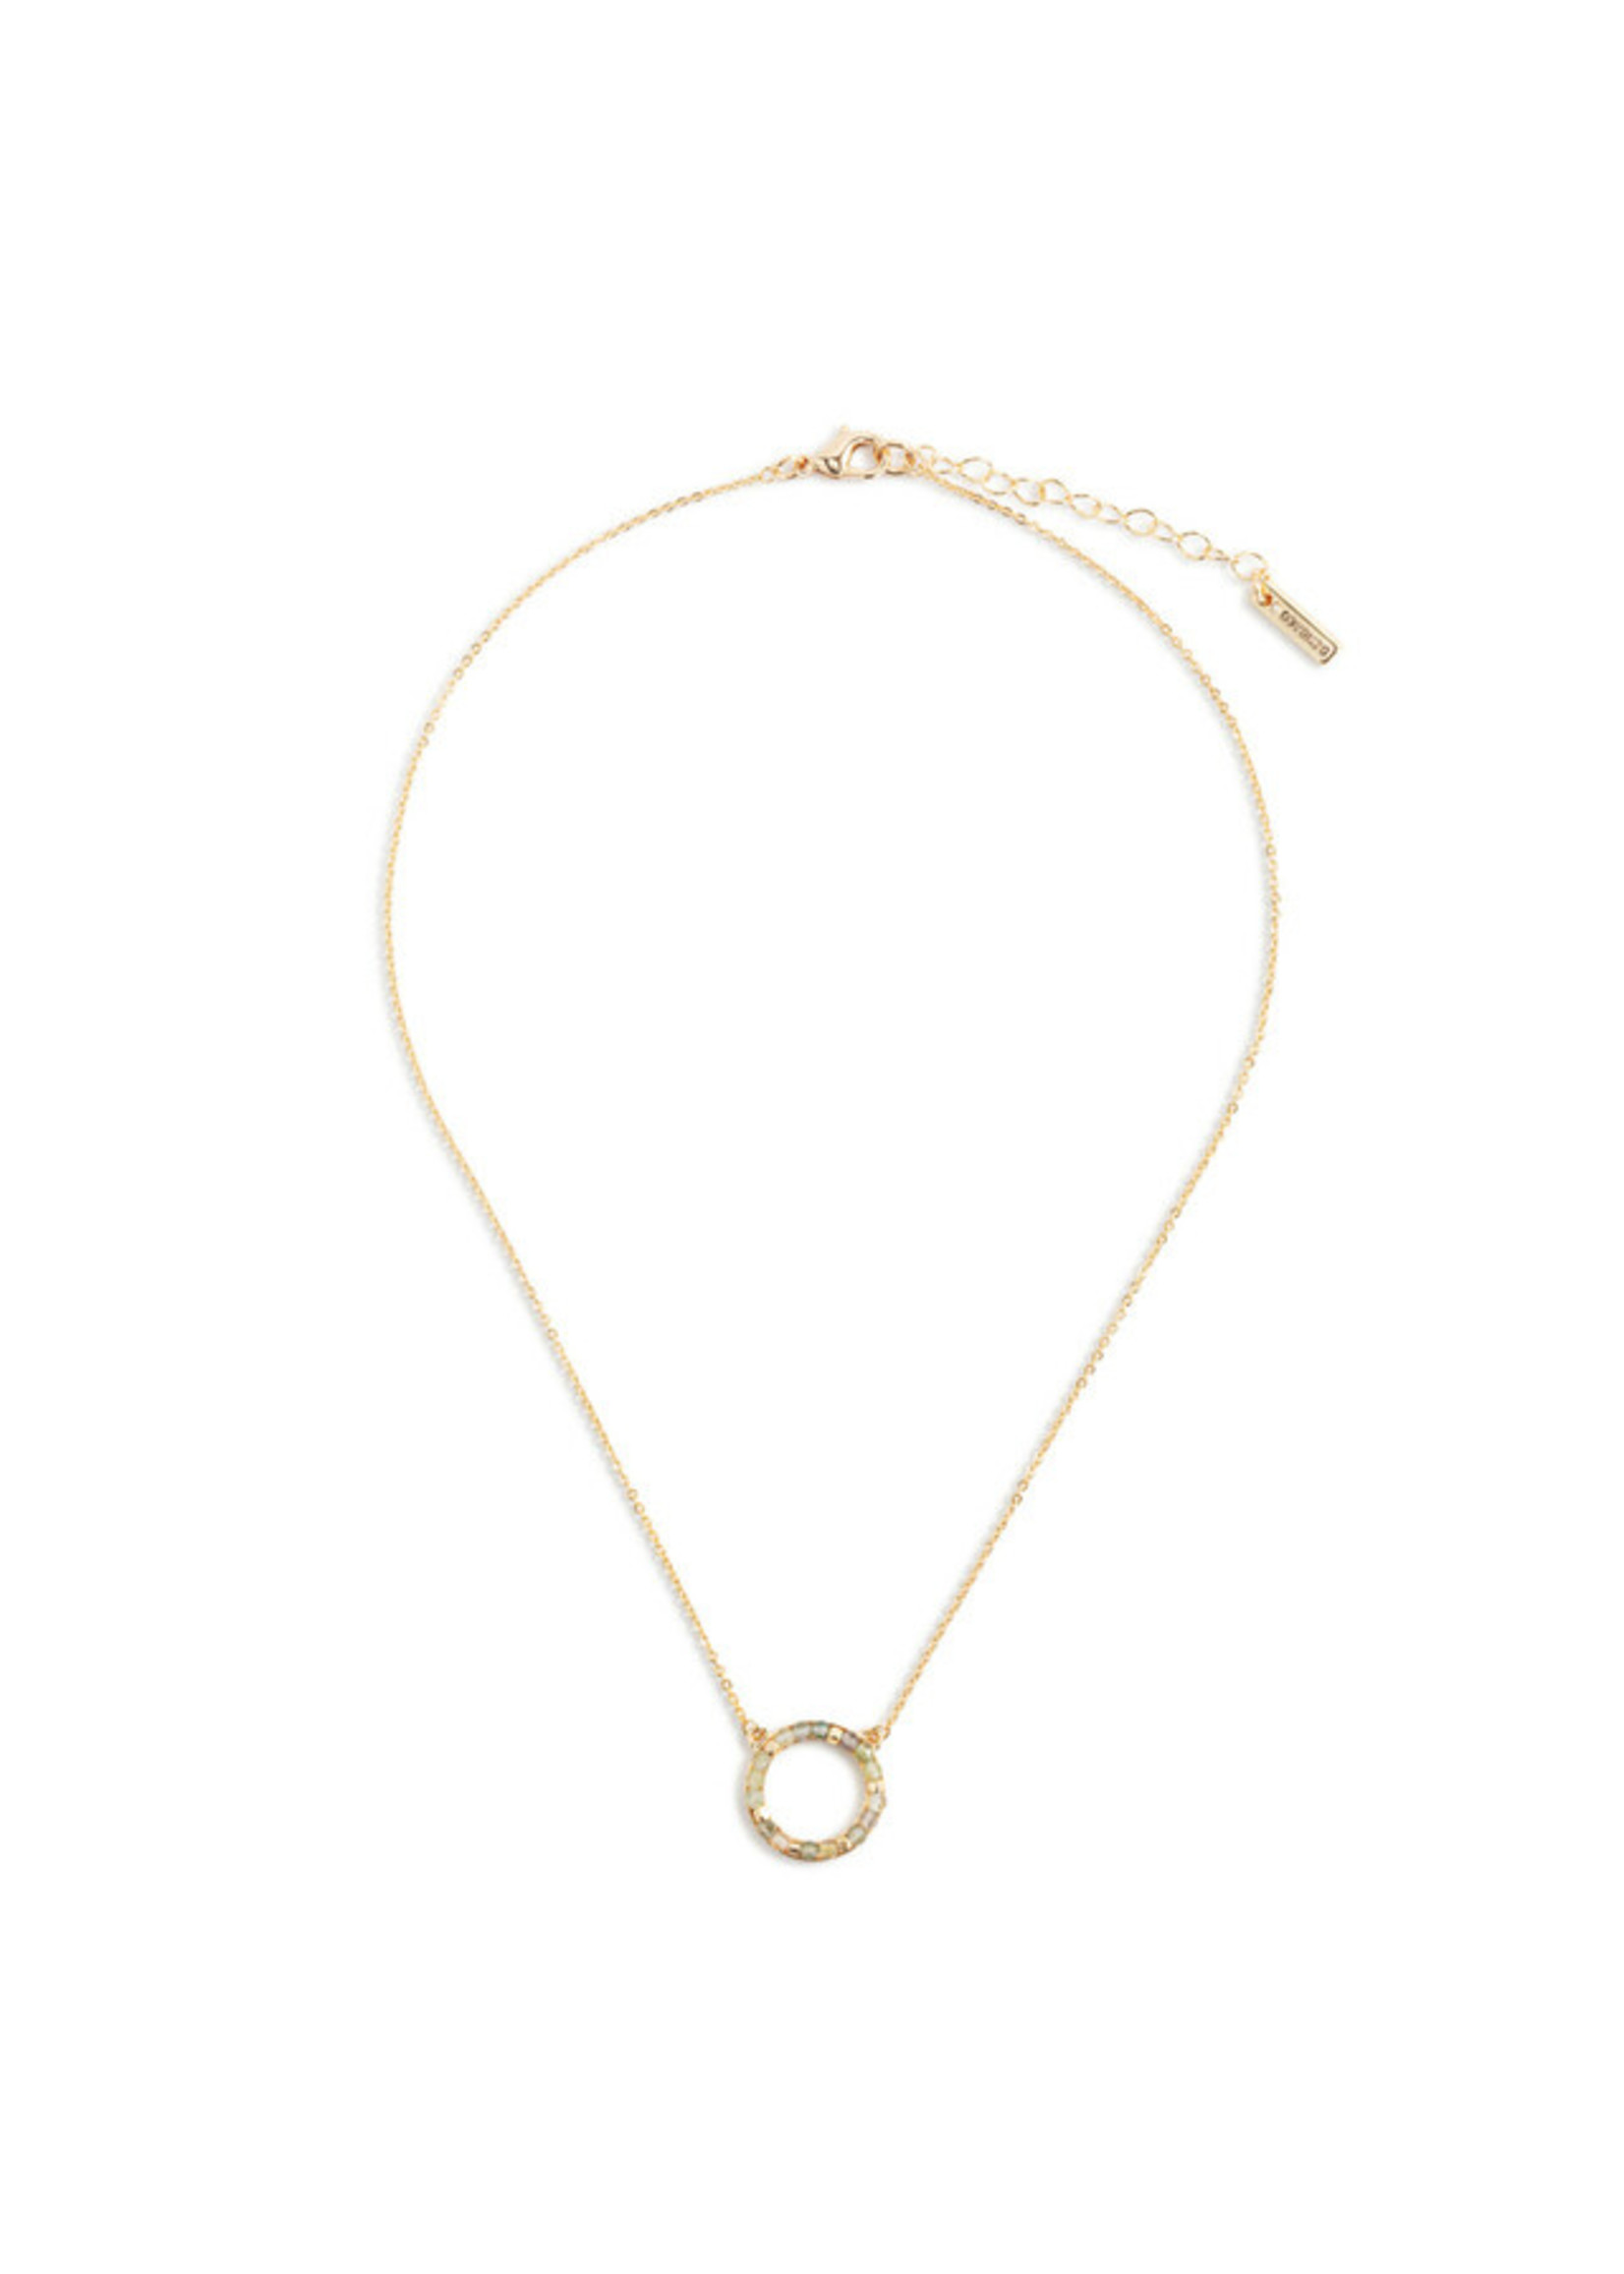 Demdaco Circle Necklace - Greem/Gold